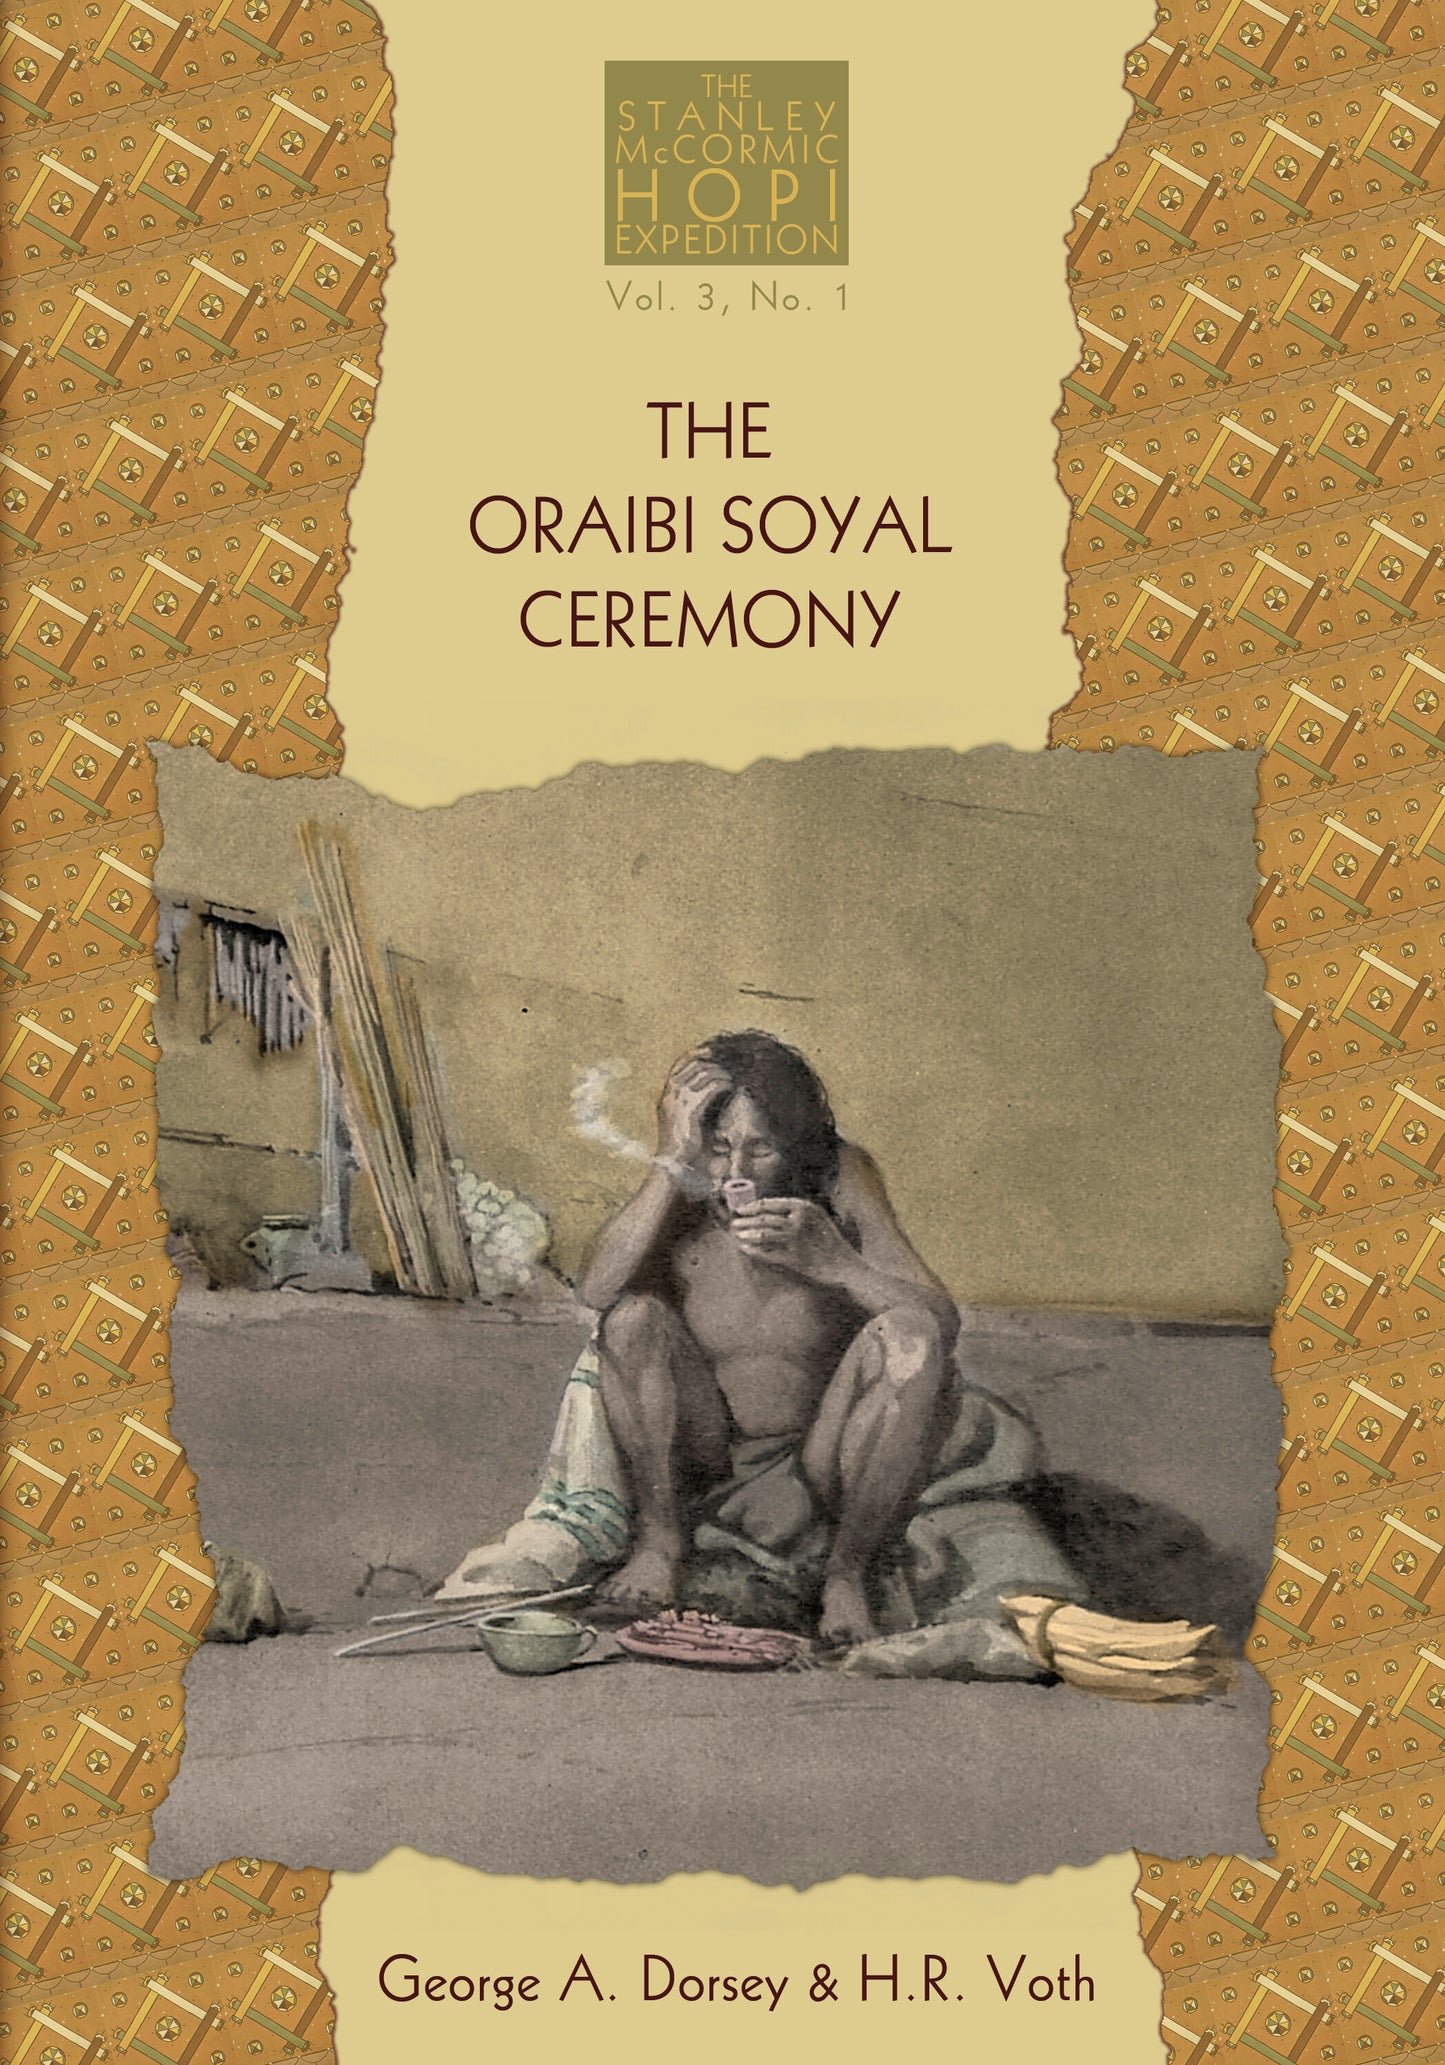 Oraibi Soyal Ceremony Volume 3 Number 1